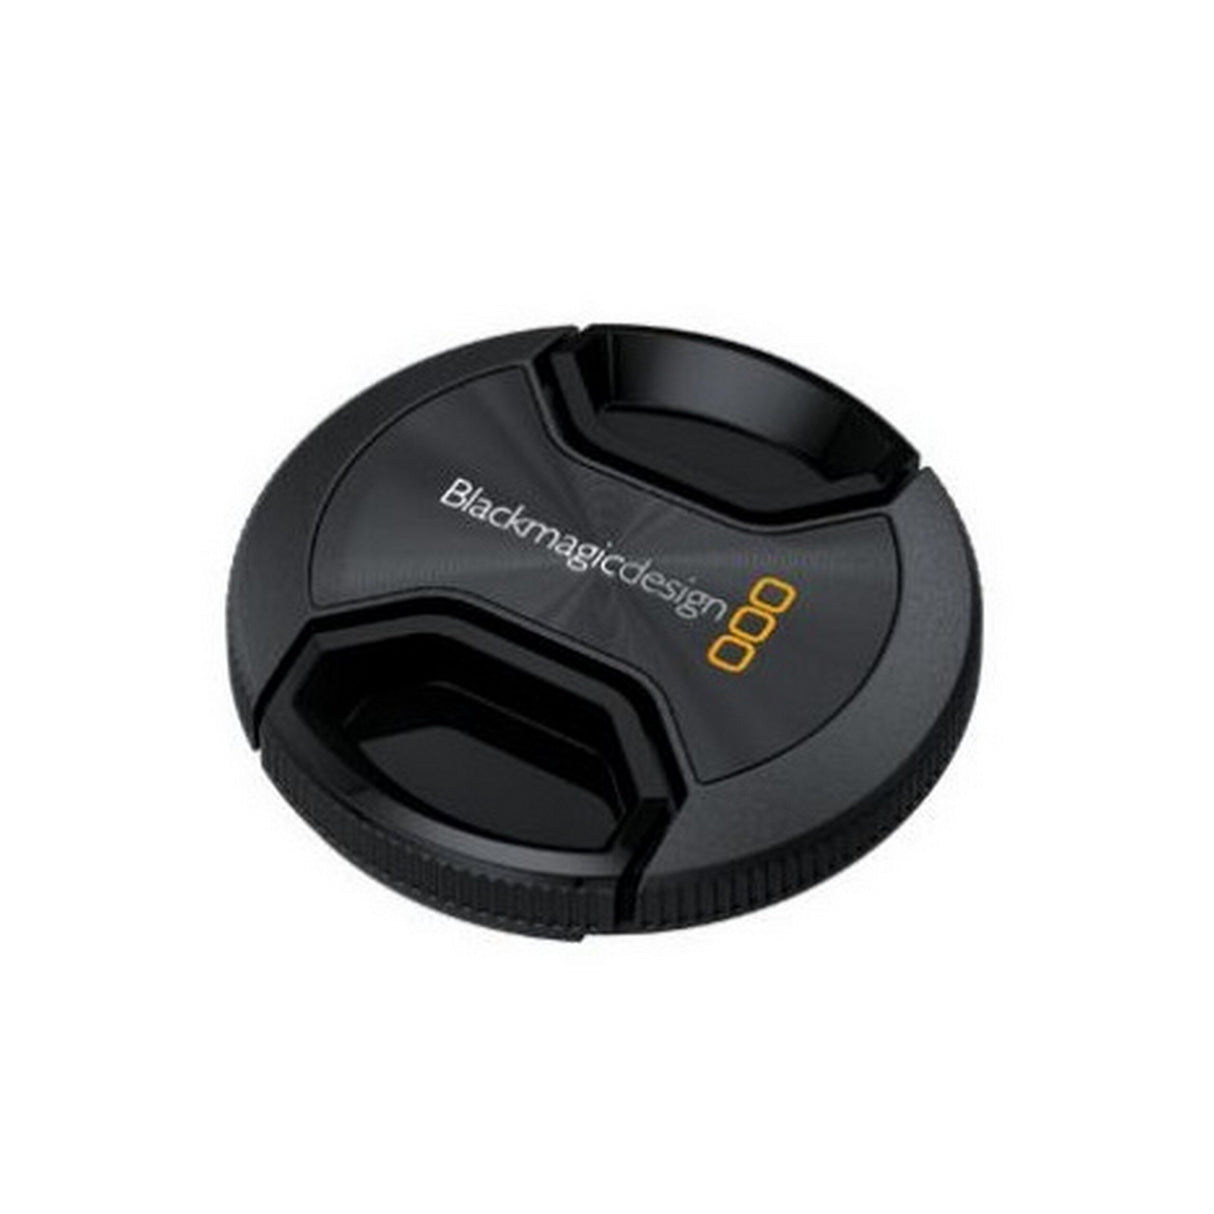 Blackmagic Design Lens Cap, 58mm